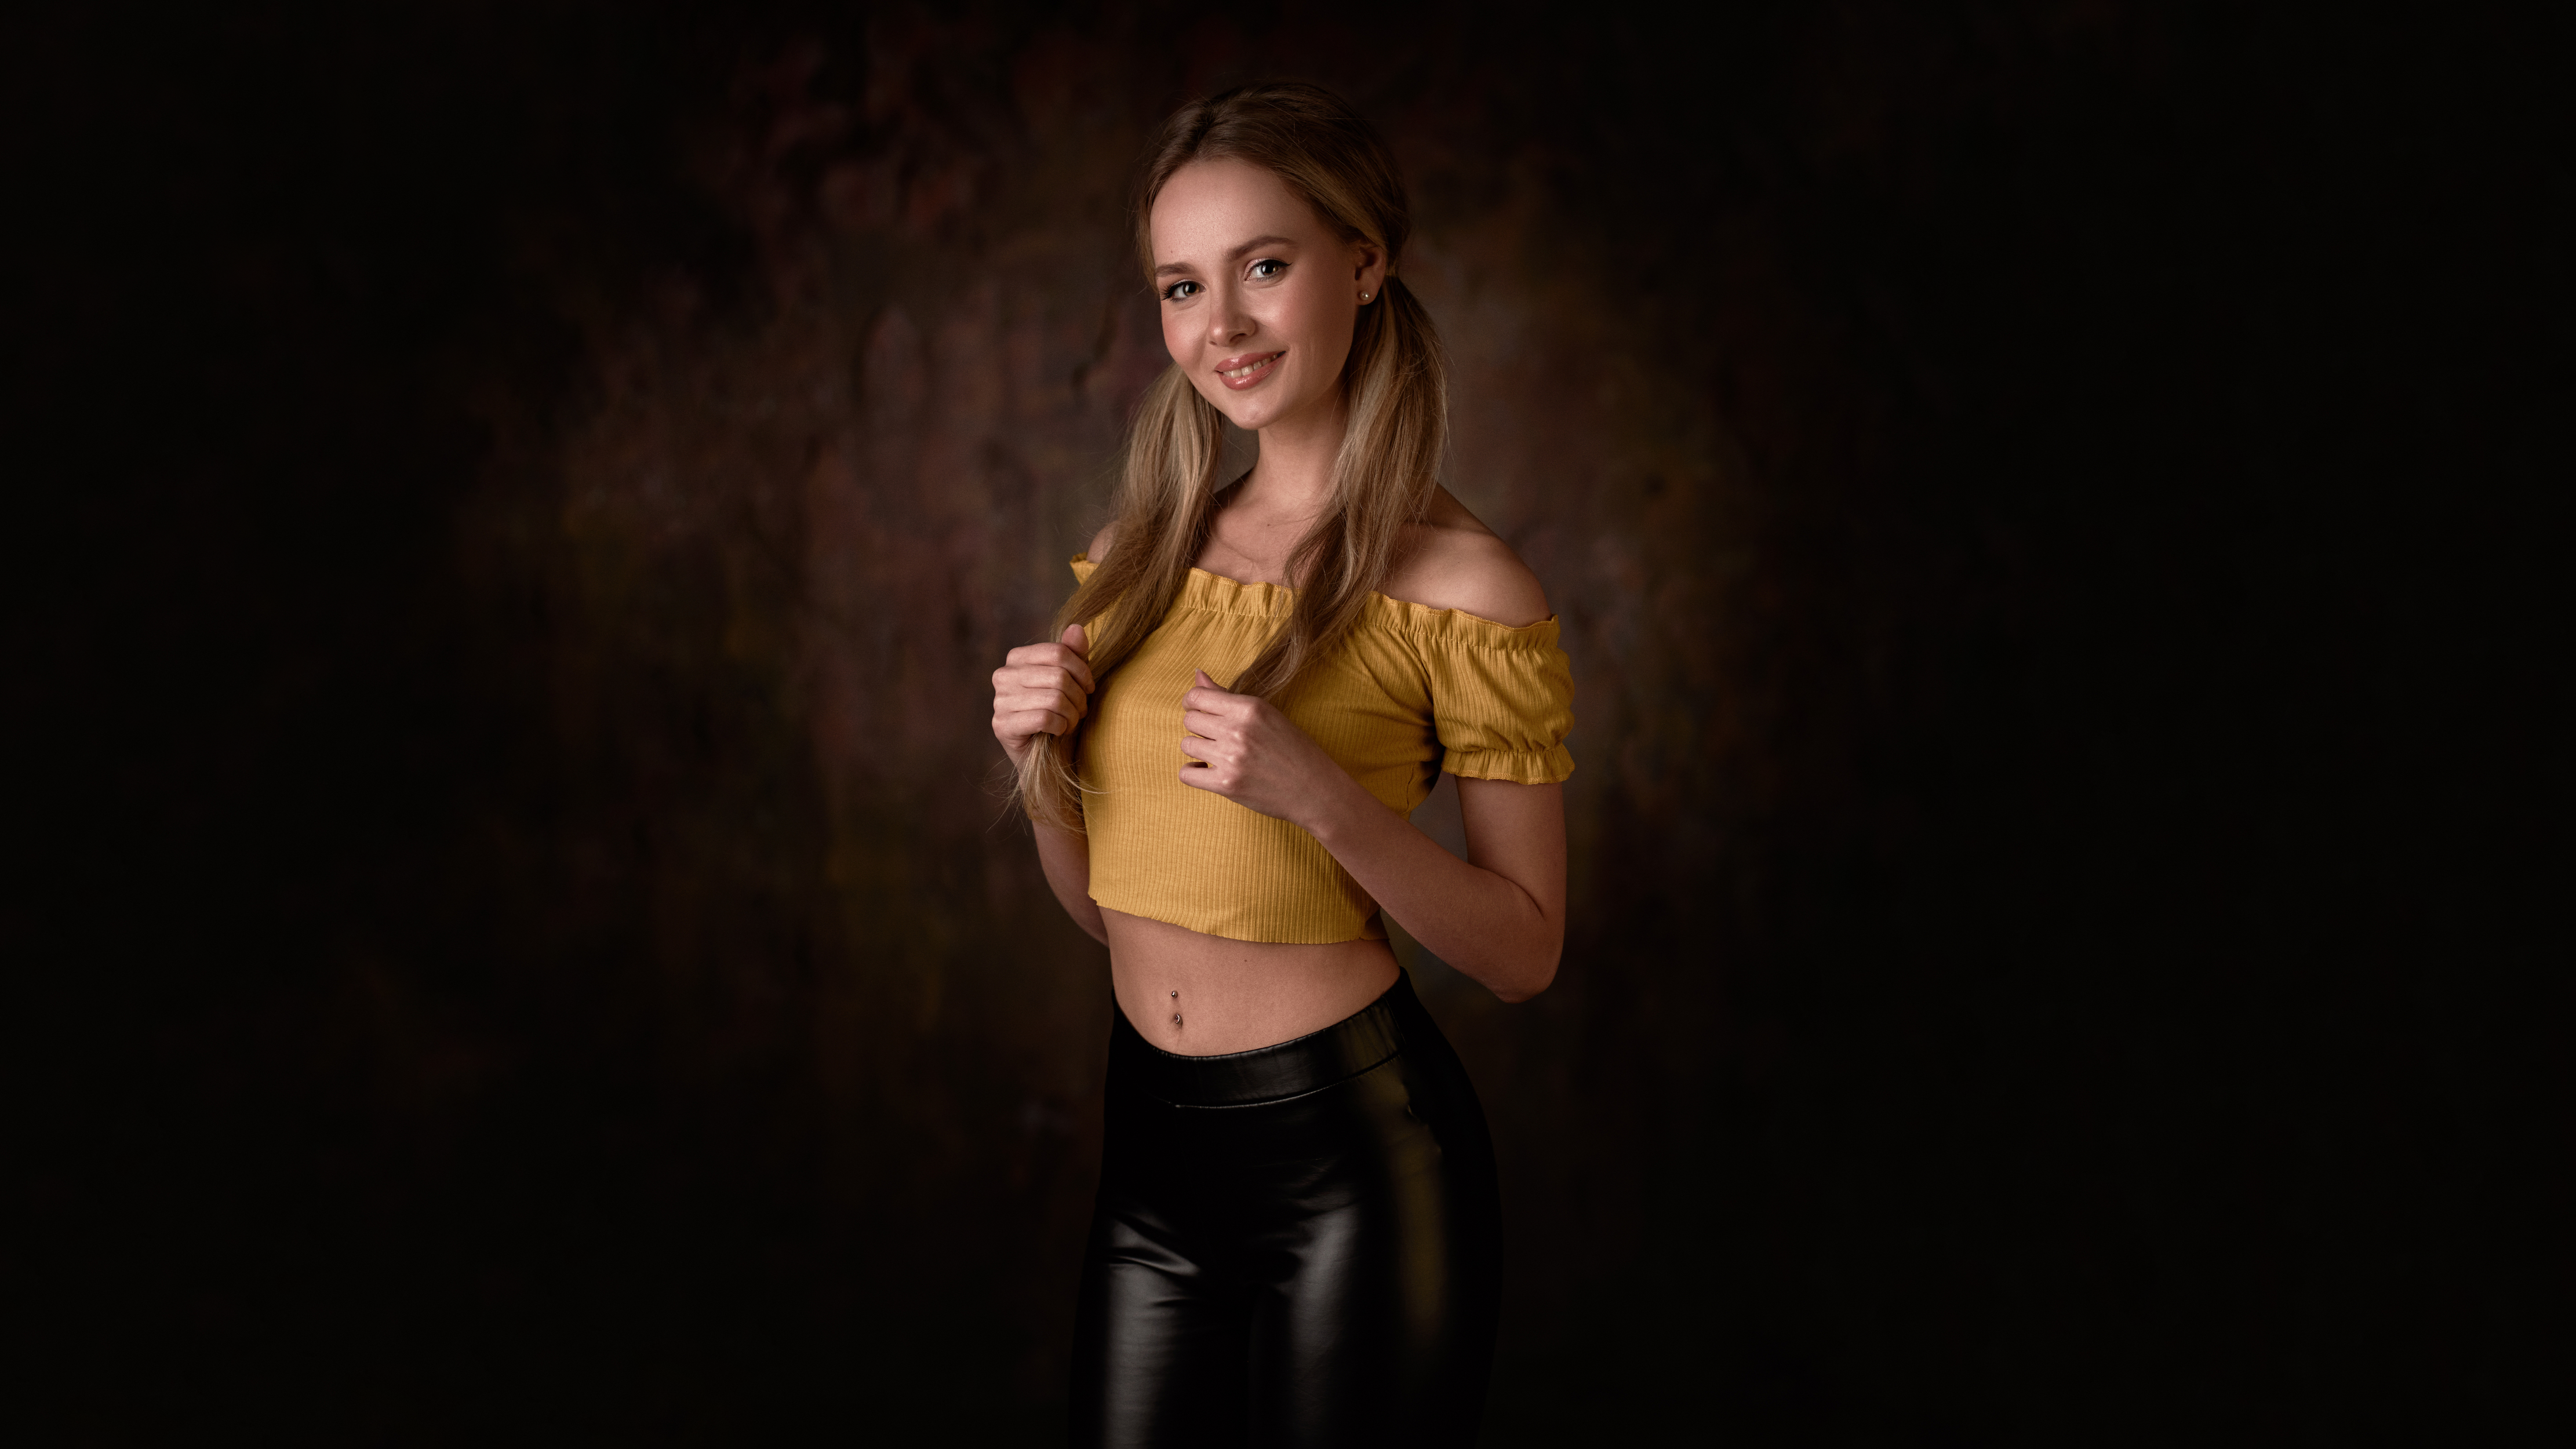 Katya Khalpert Max Pyzhik Women Model Blonde Twintails Bare Shoulders Yellow Tops Smiling Dark Backg 4444x2500